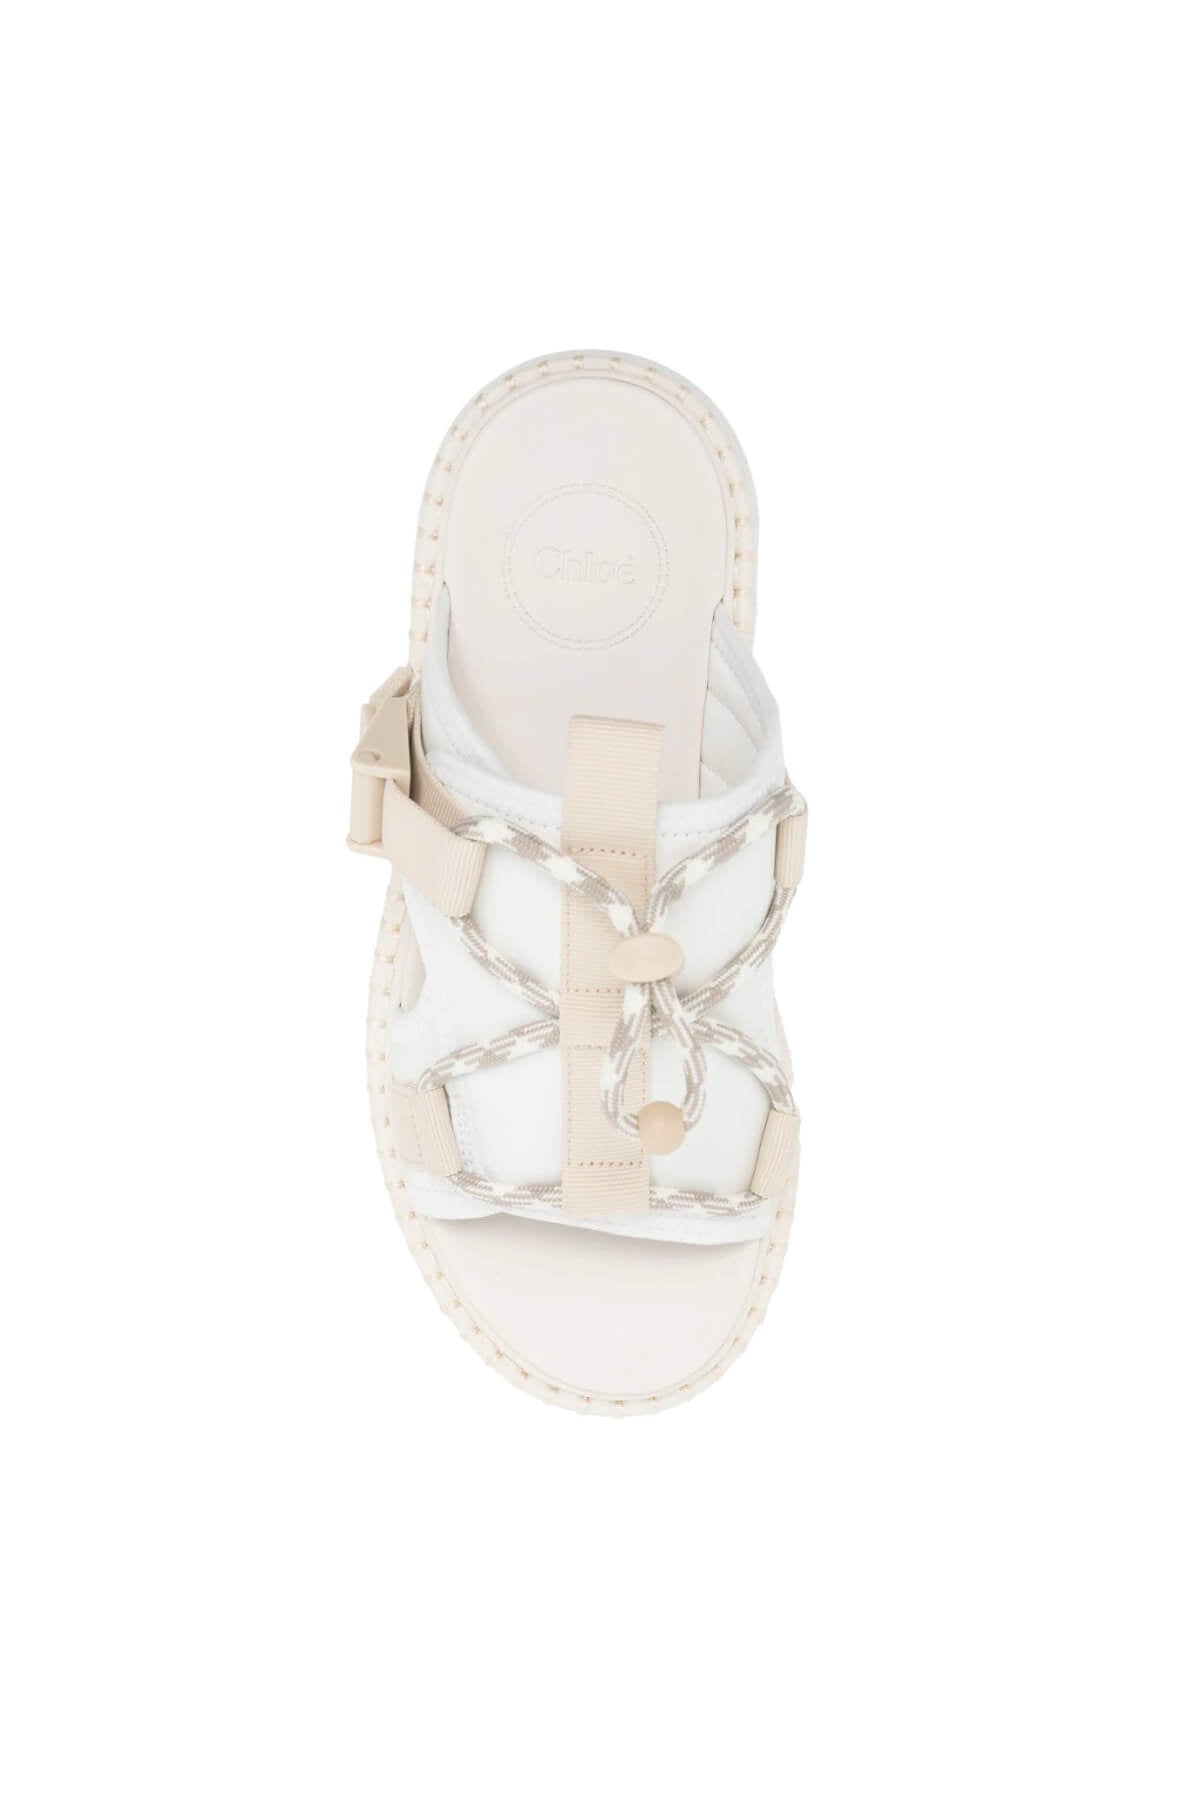 Chloé Lilli Neoprene Sandals - Off White